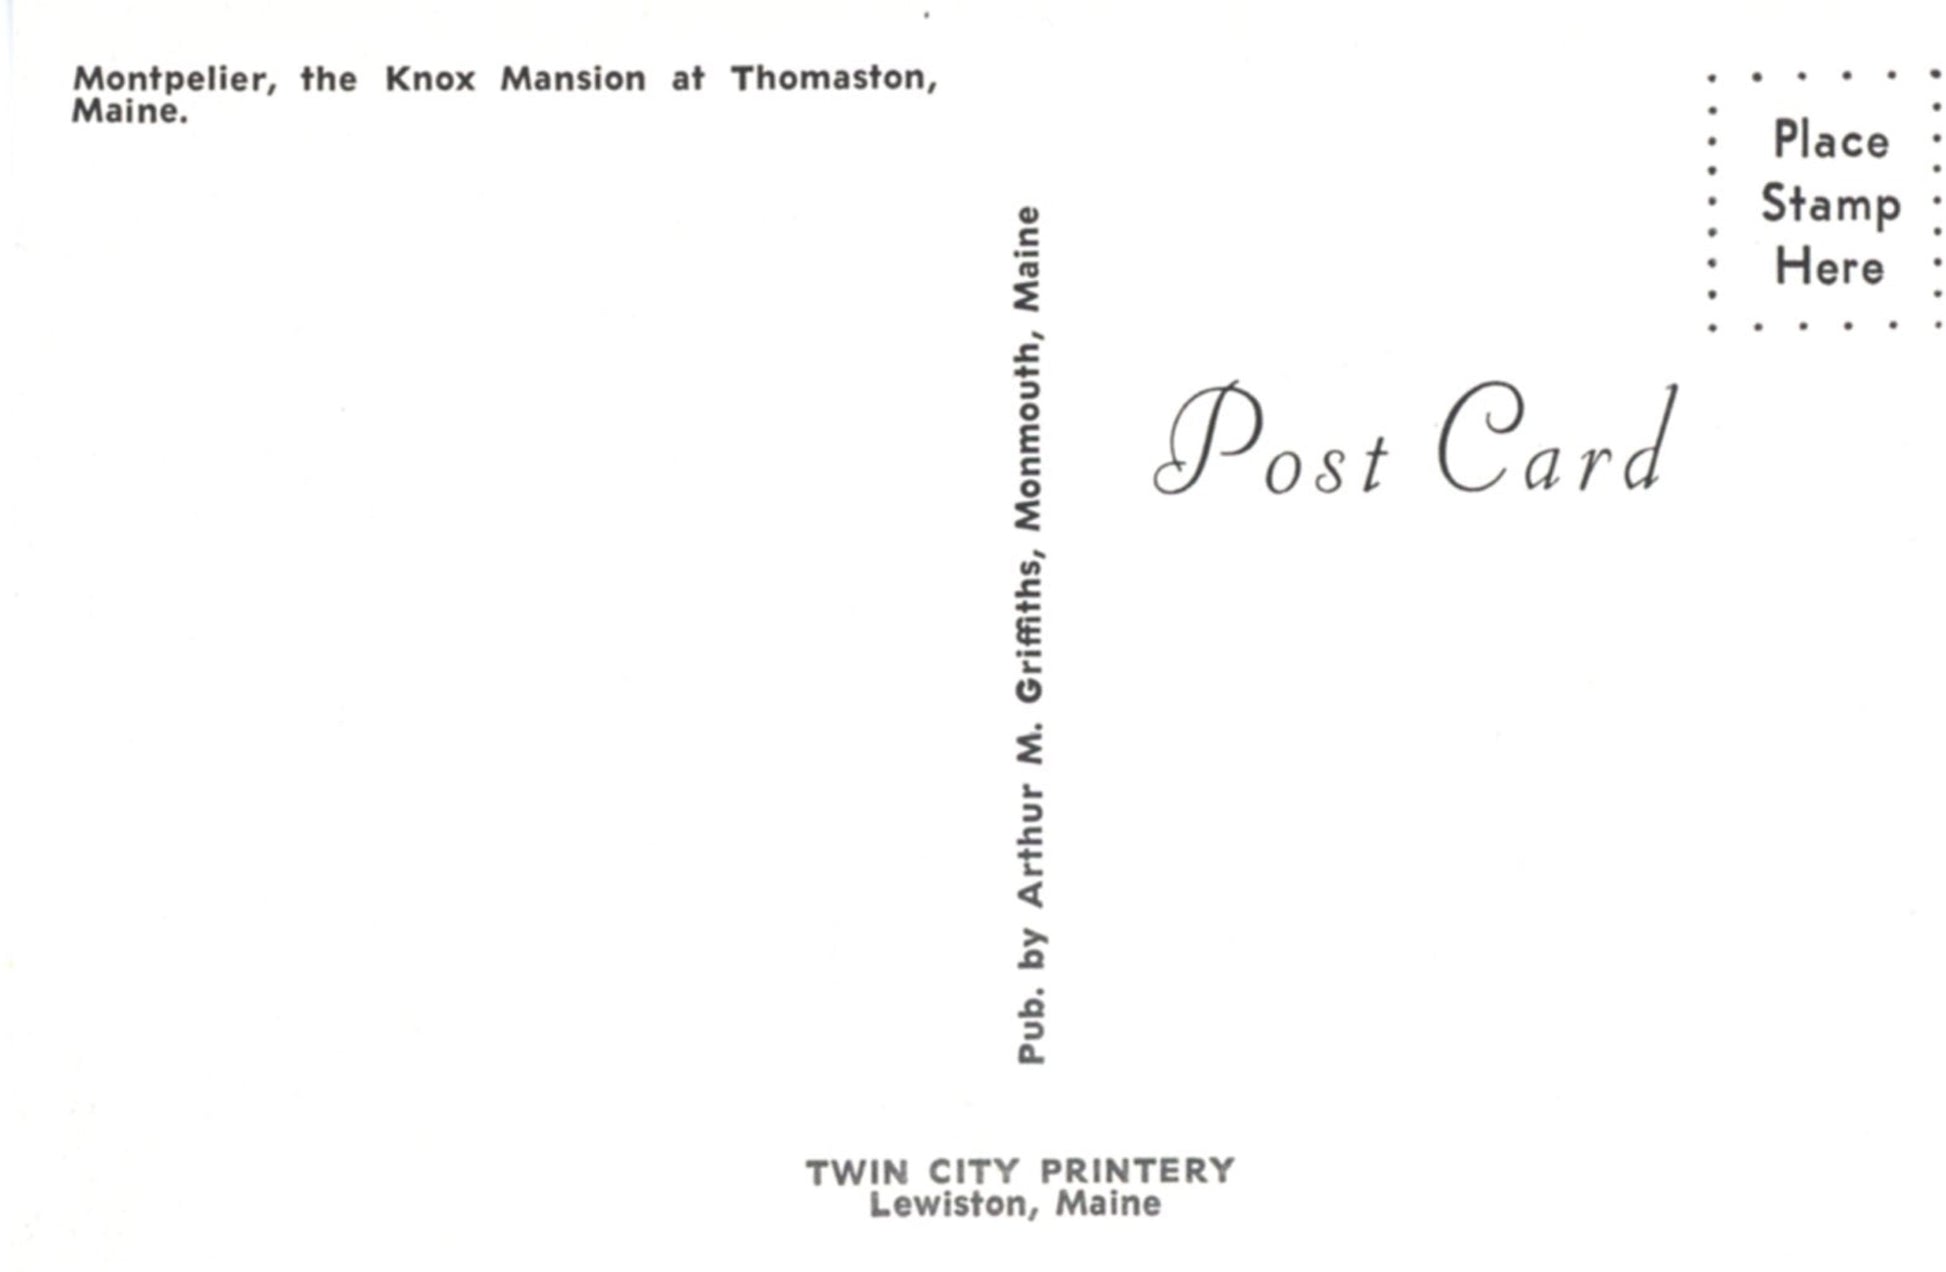 Montpelier Knox Mansion THOMASTON MAINE Vintage Postcard ©1970's